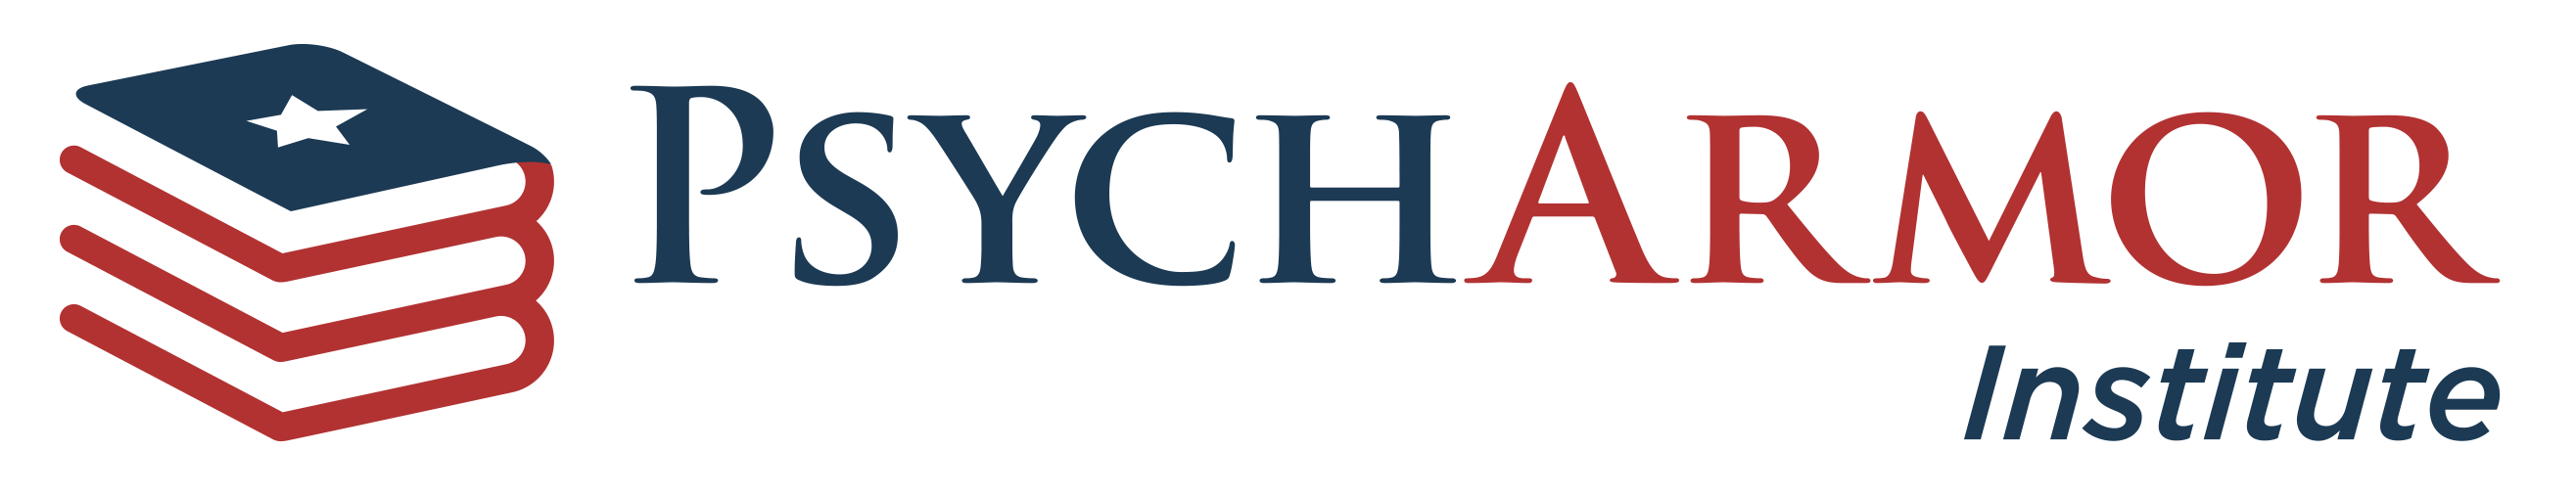 PsychArmorInstitute Logo